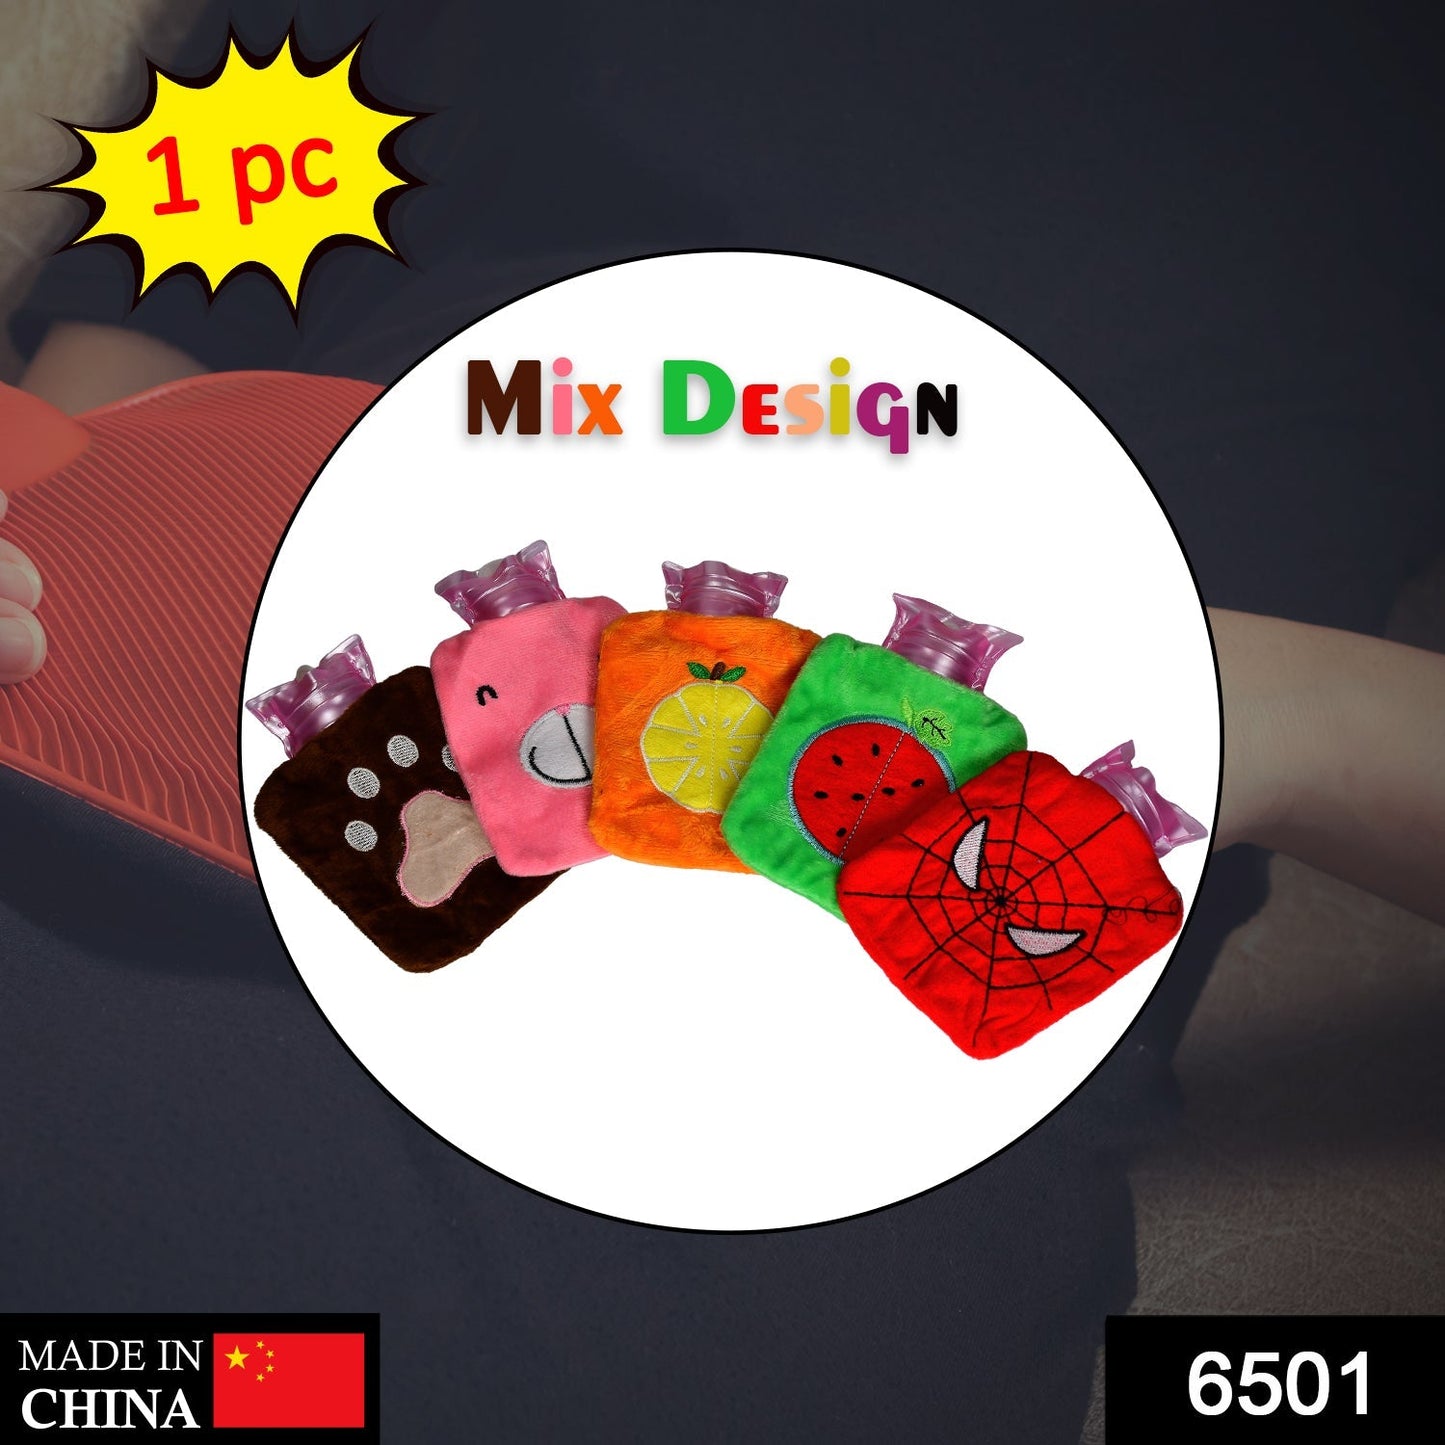 6501 Mini 1pc Mix design hot water bag for pain relief. DeoDap